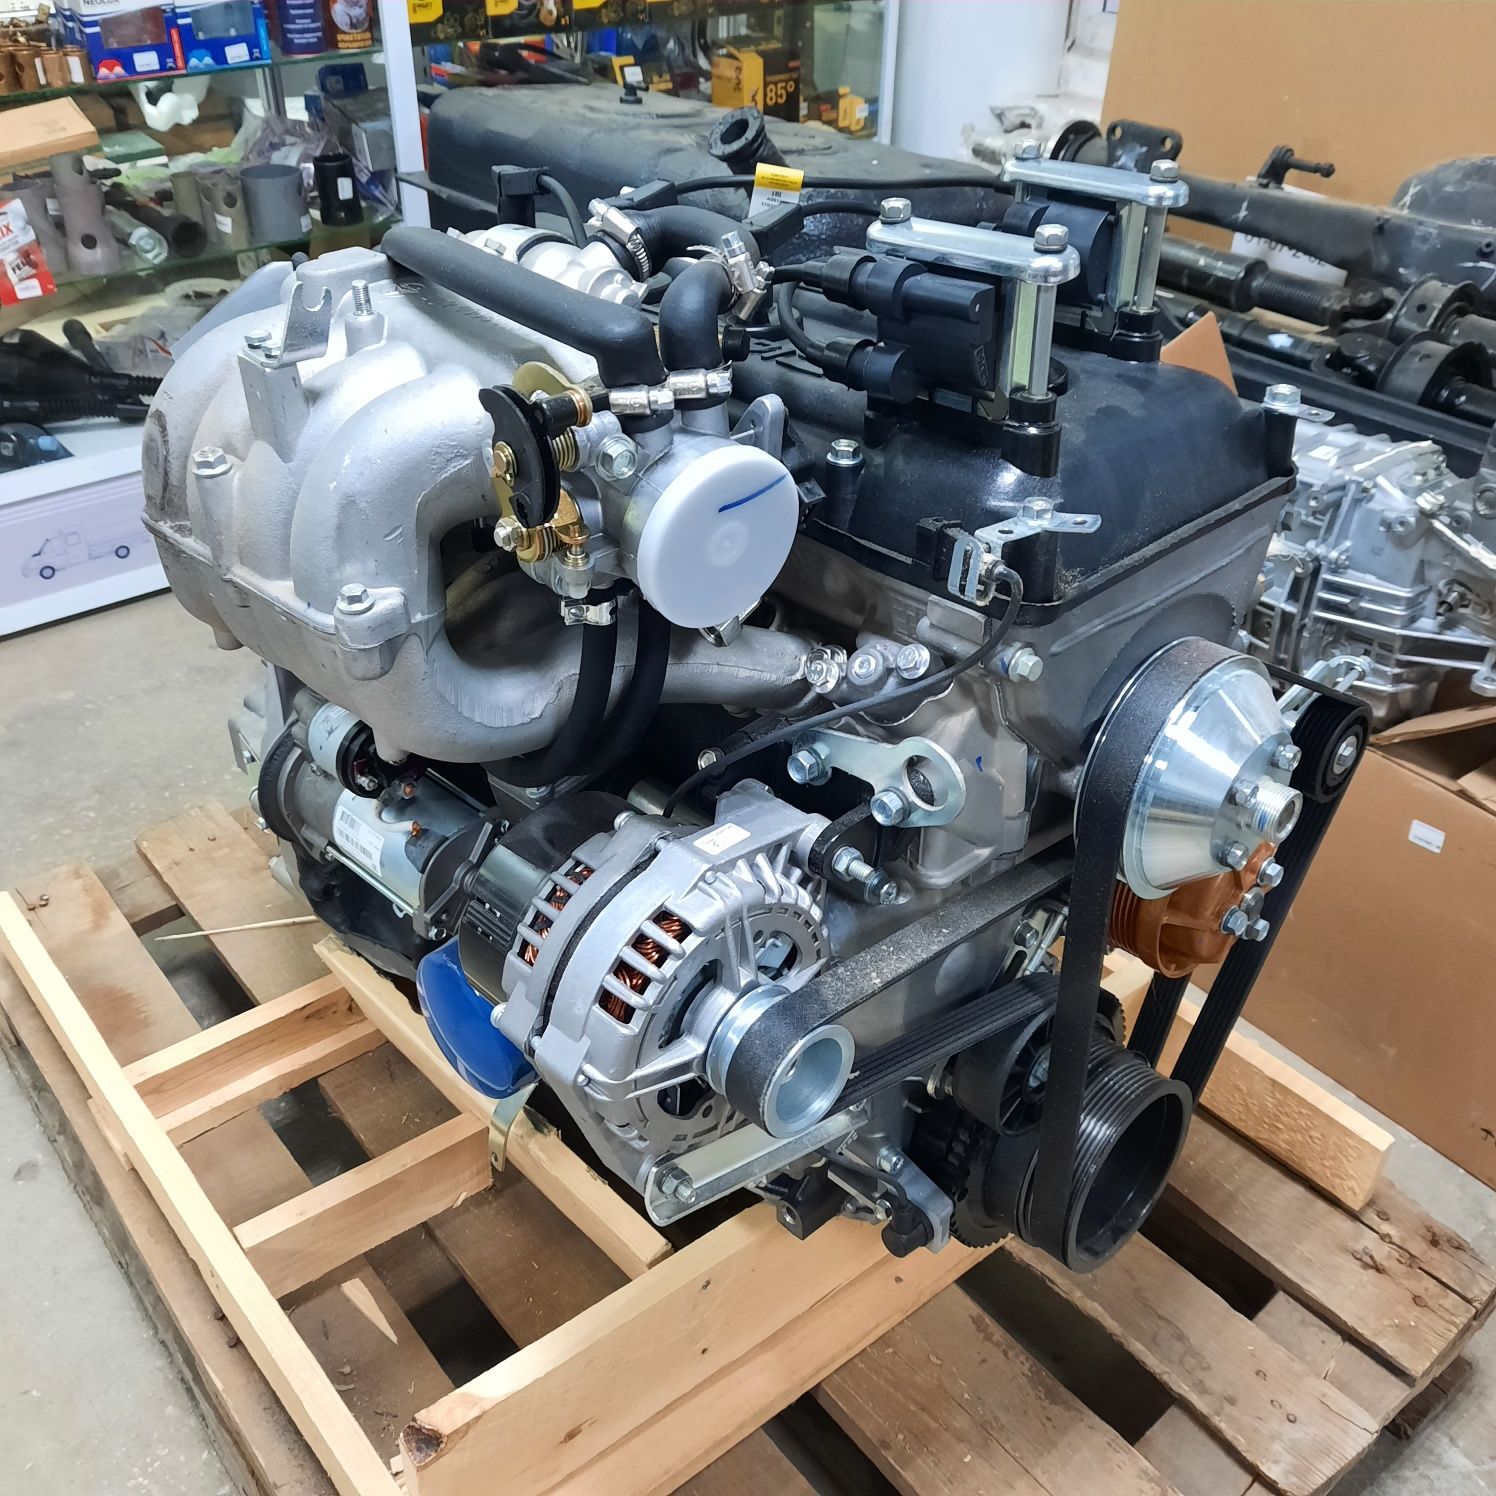 Новый двигатель УАЗ  ЗМЗ-409 Евро-3